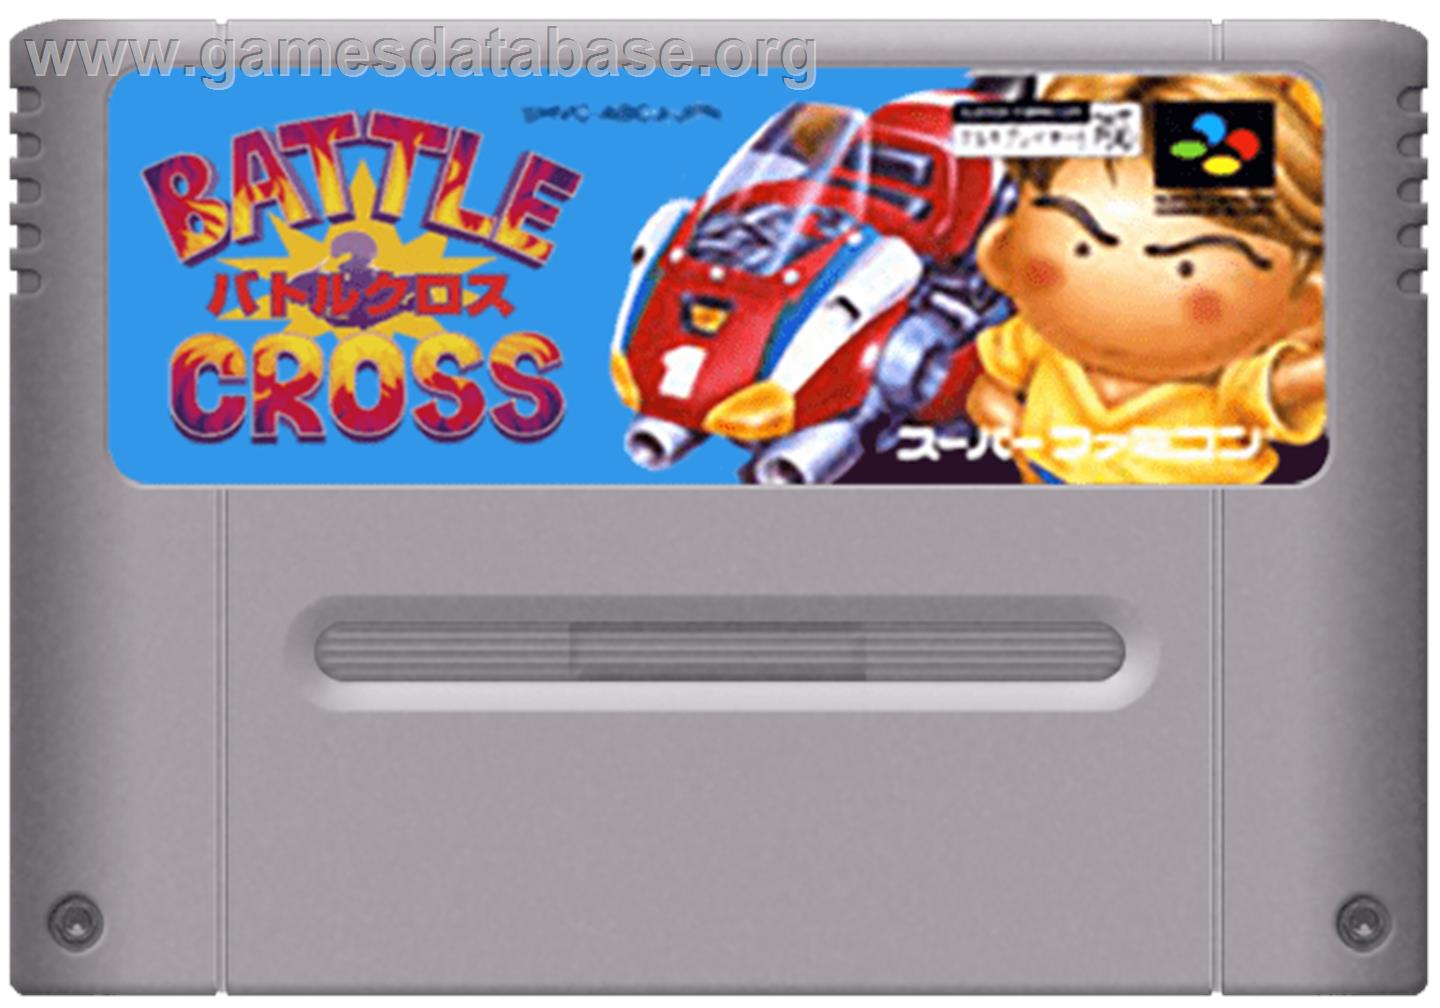 Battle Cross - Nintendo SNES - Artwork - Cartridge